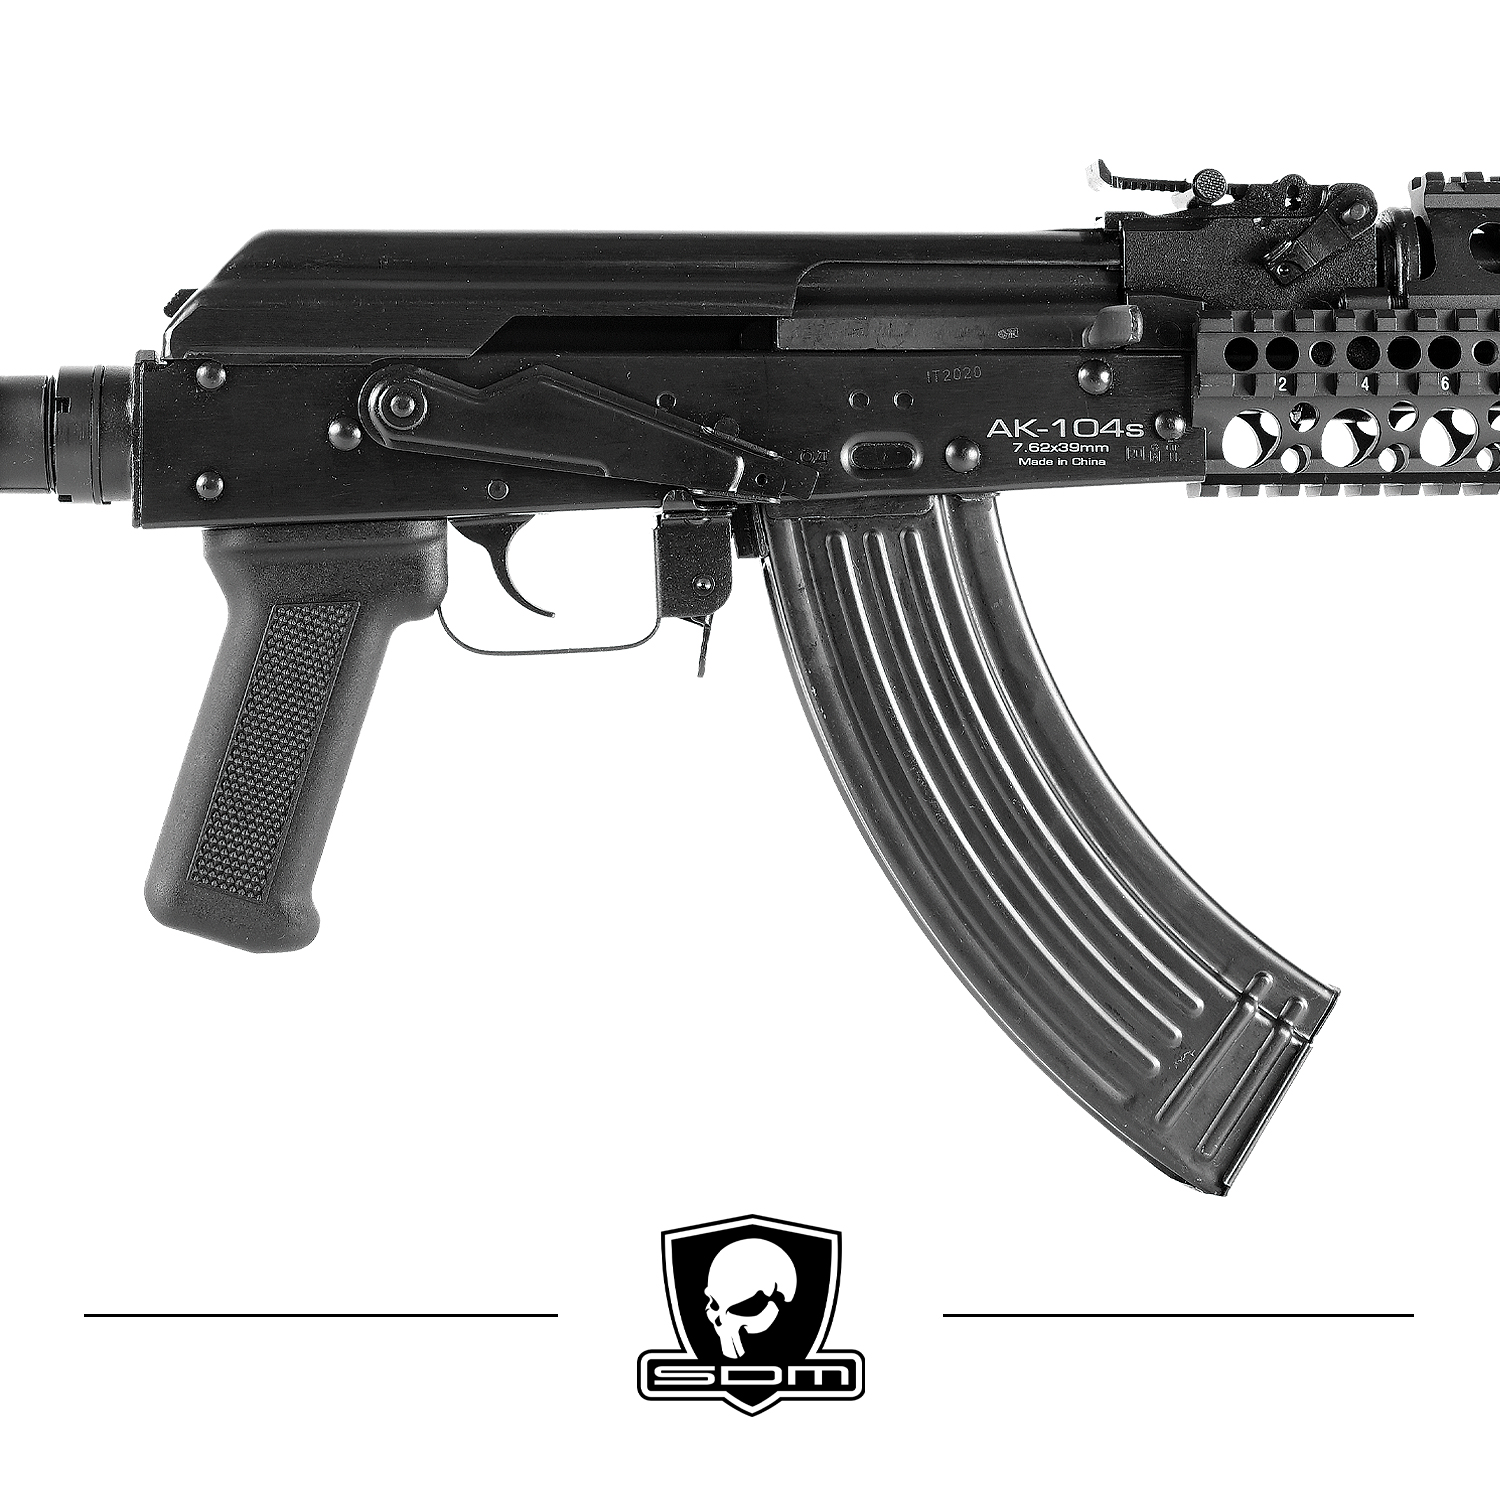 SDM carabina semiauto. mod.  AK-104 cal. 7,62x39